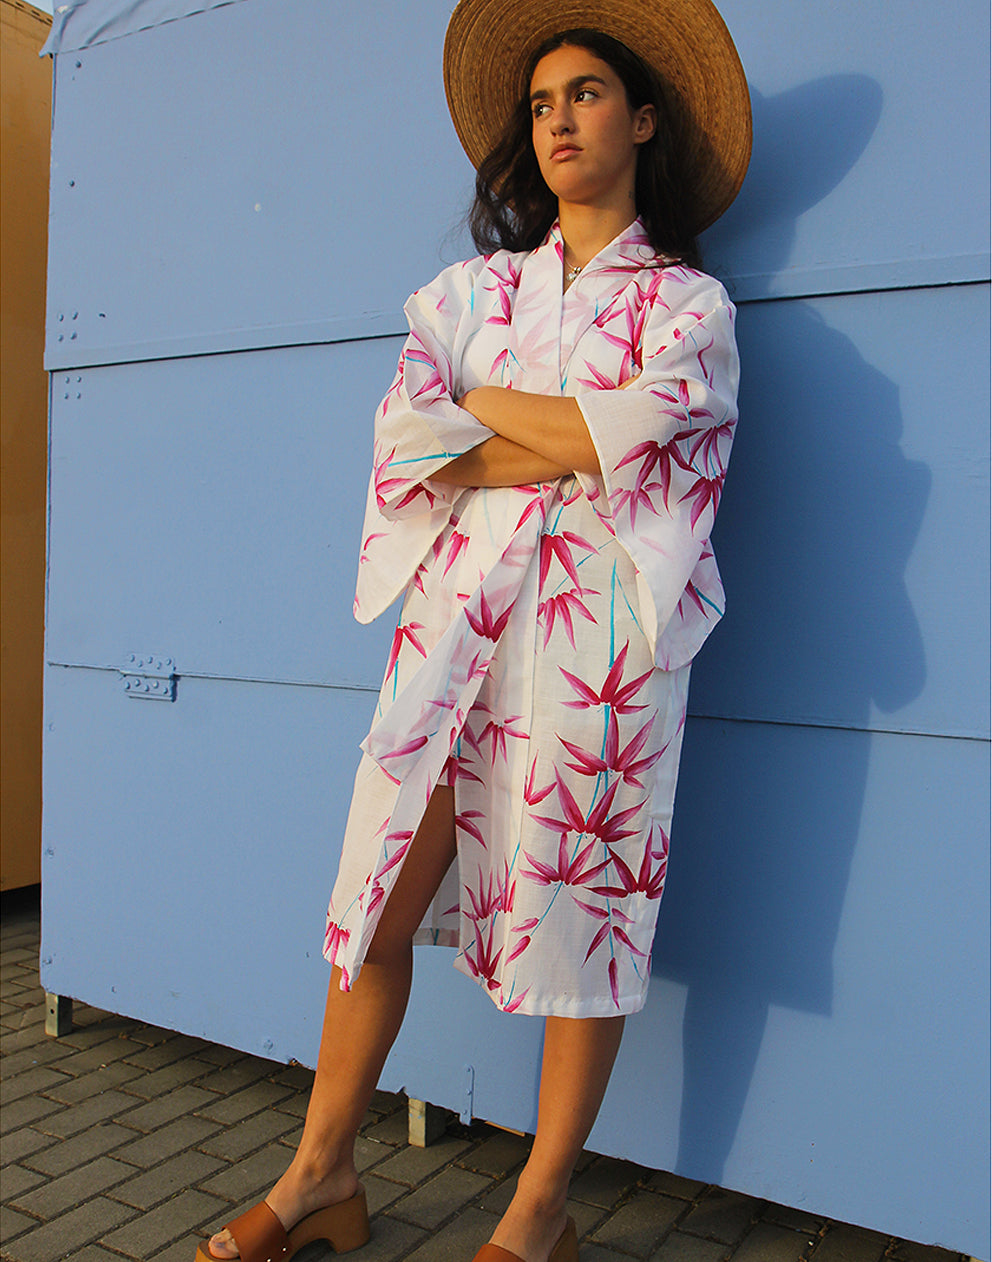 Original Vintage White & Pink Floral Print Kimono Duster Jacket